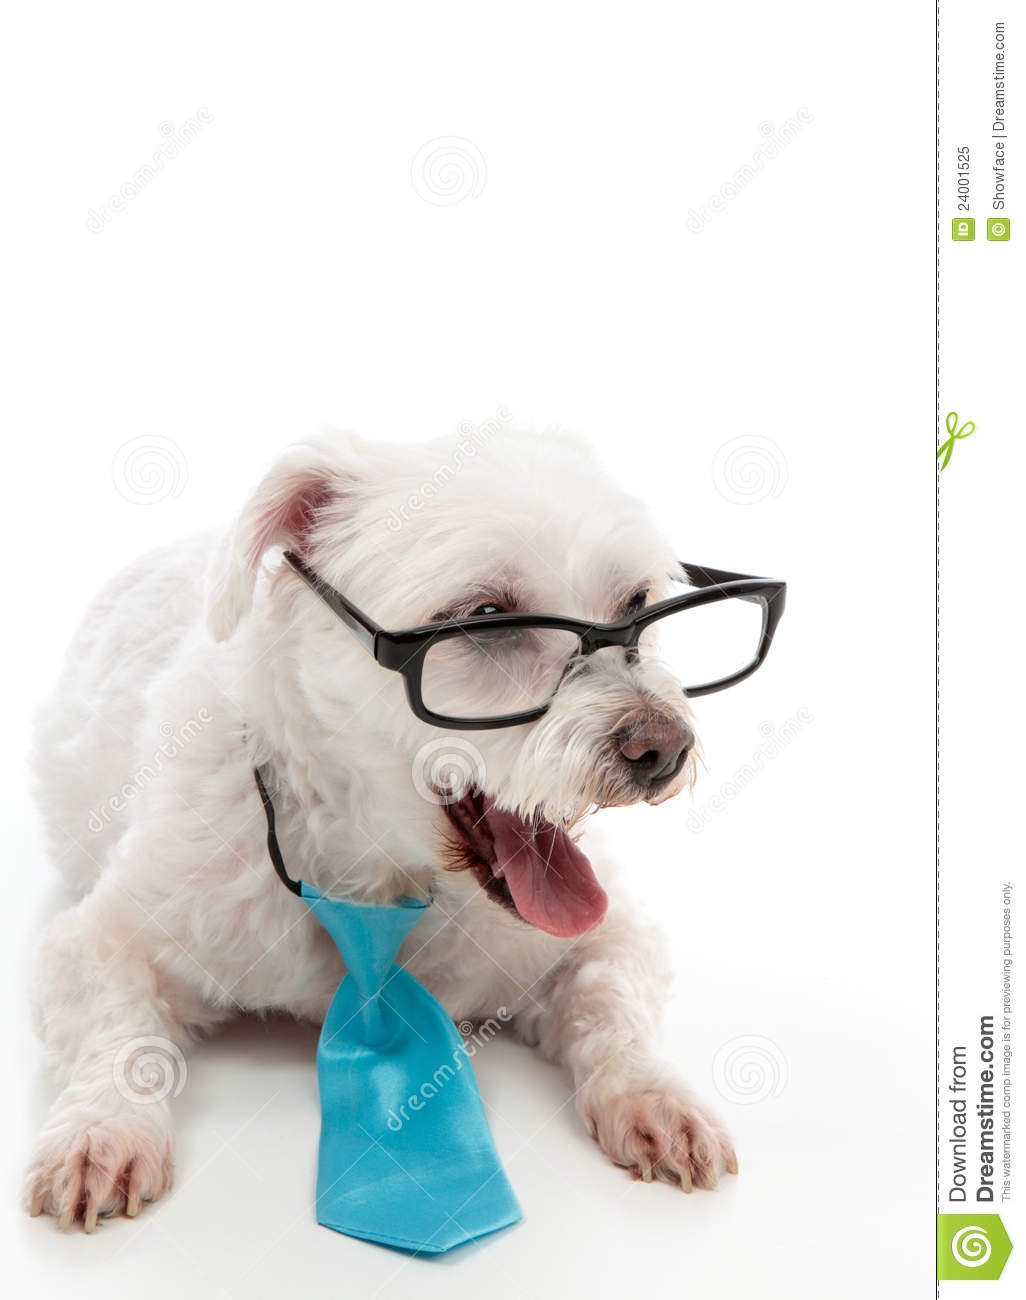 Smart Dog Surprised Royalty Free Stock Photo   Image  24001525